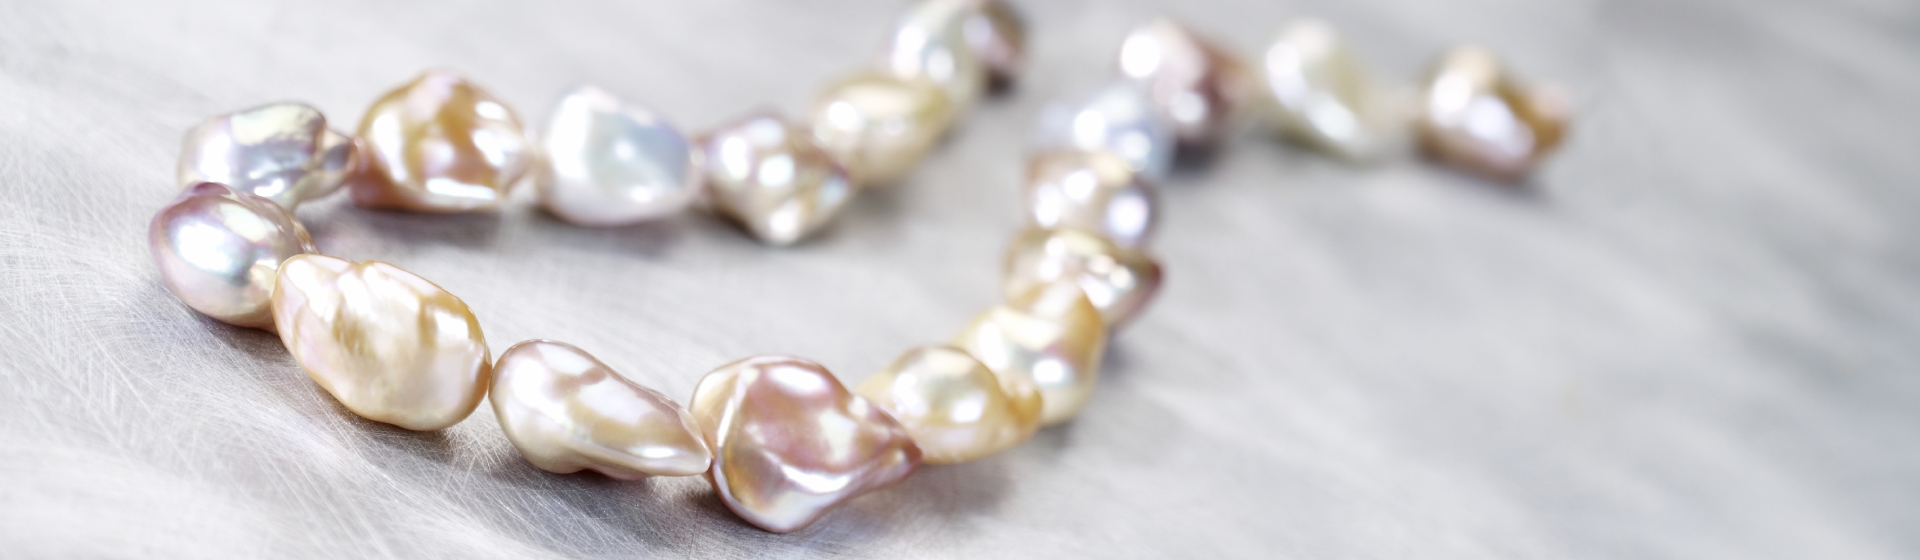 Header-Perlenketten-3840_1120